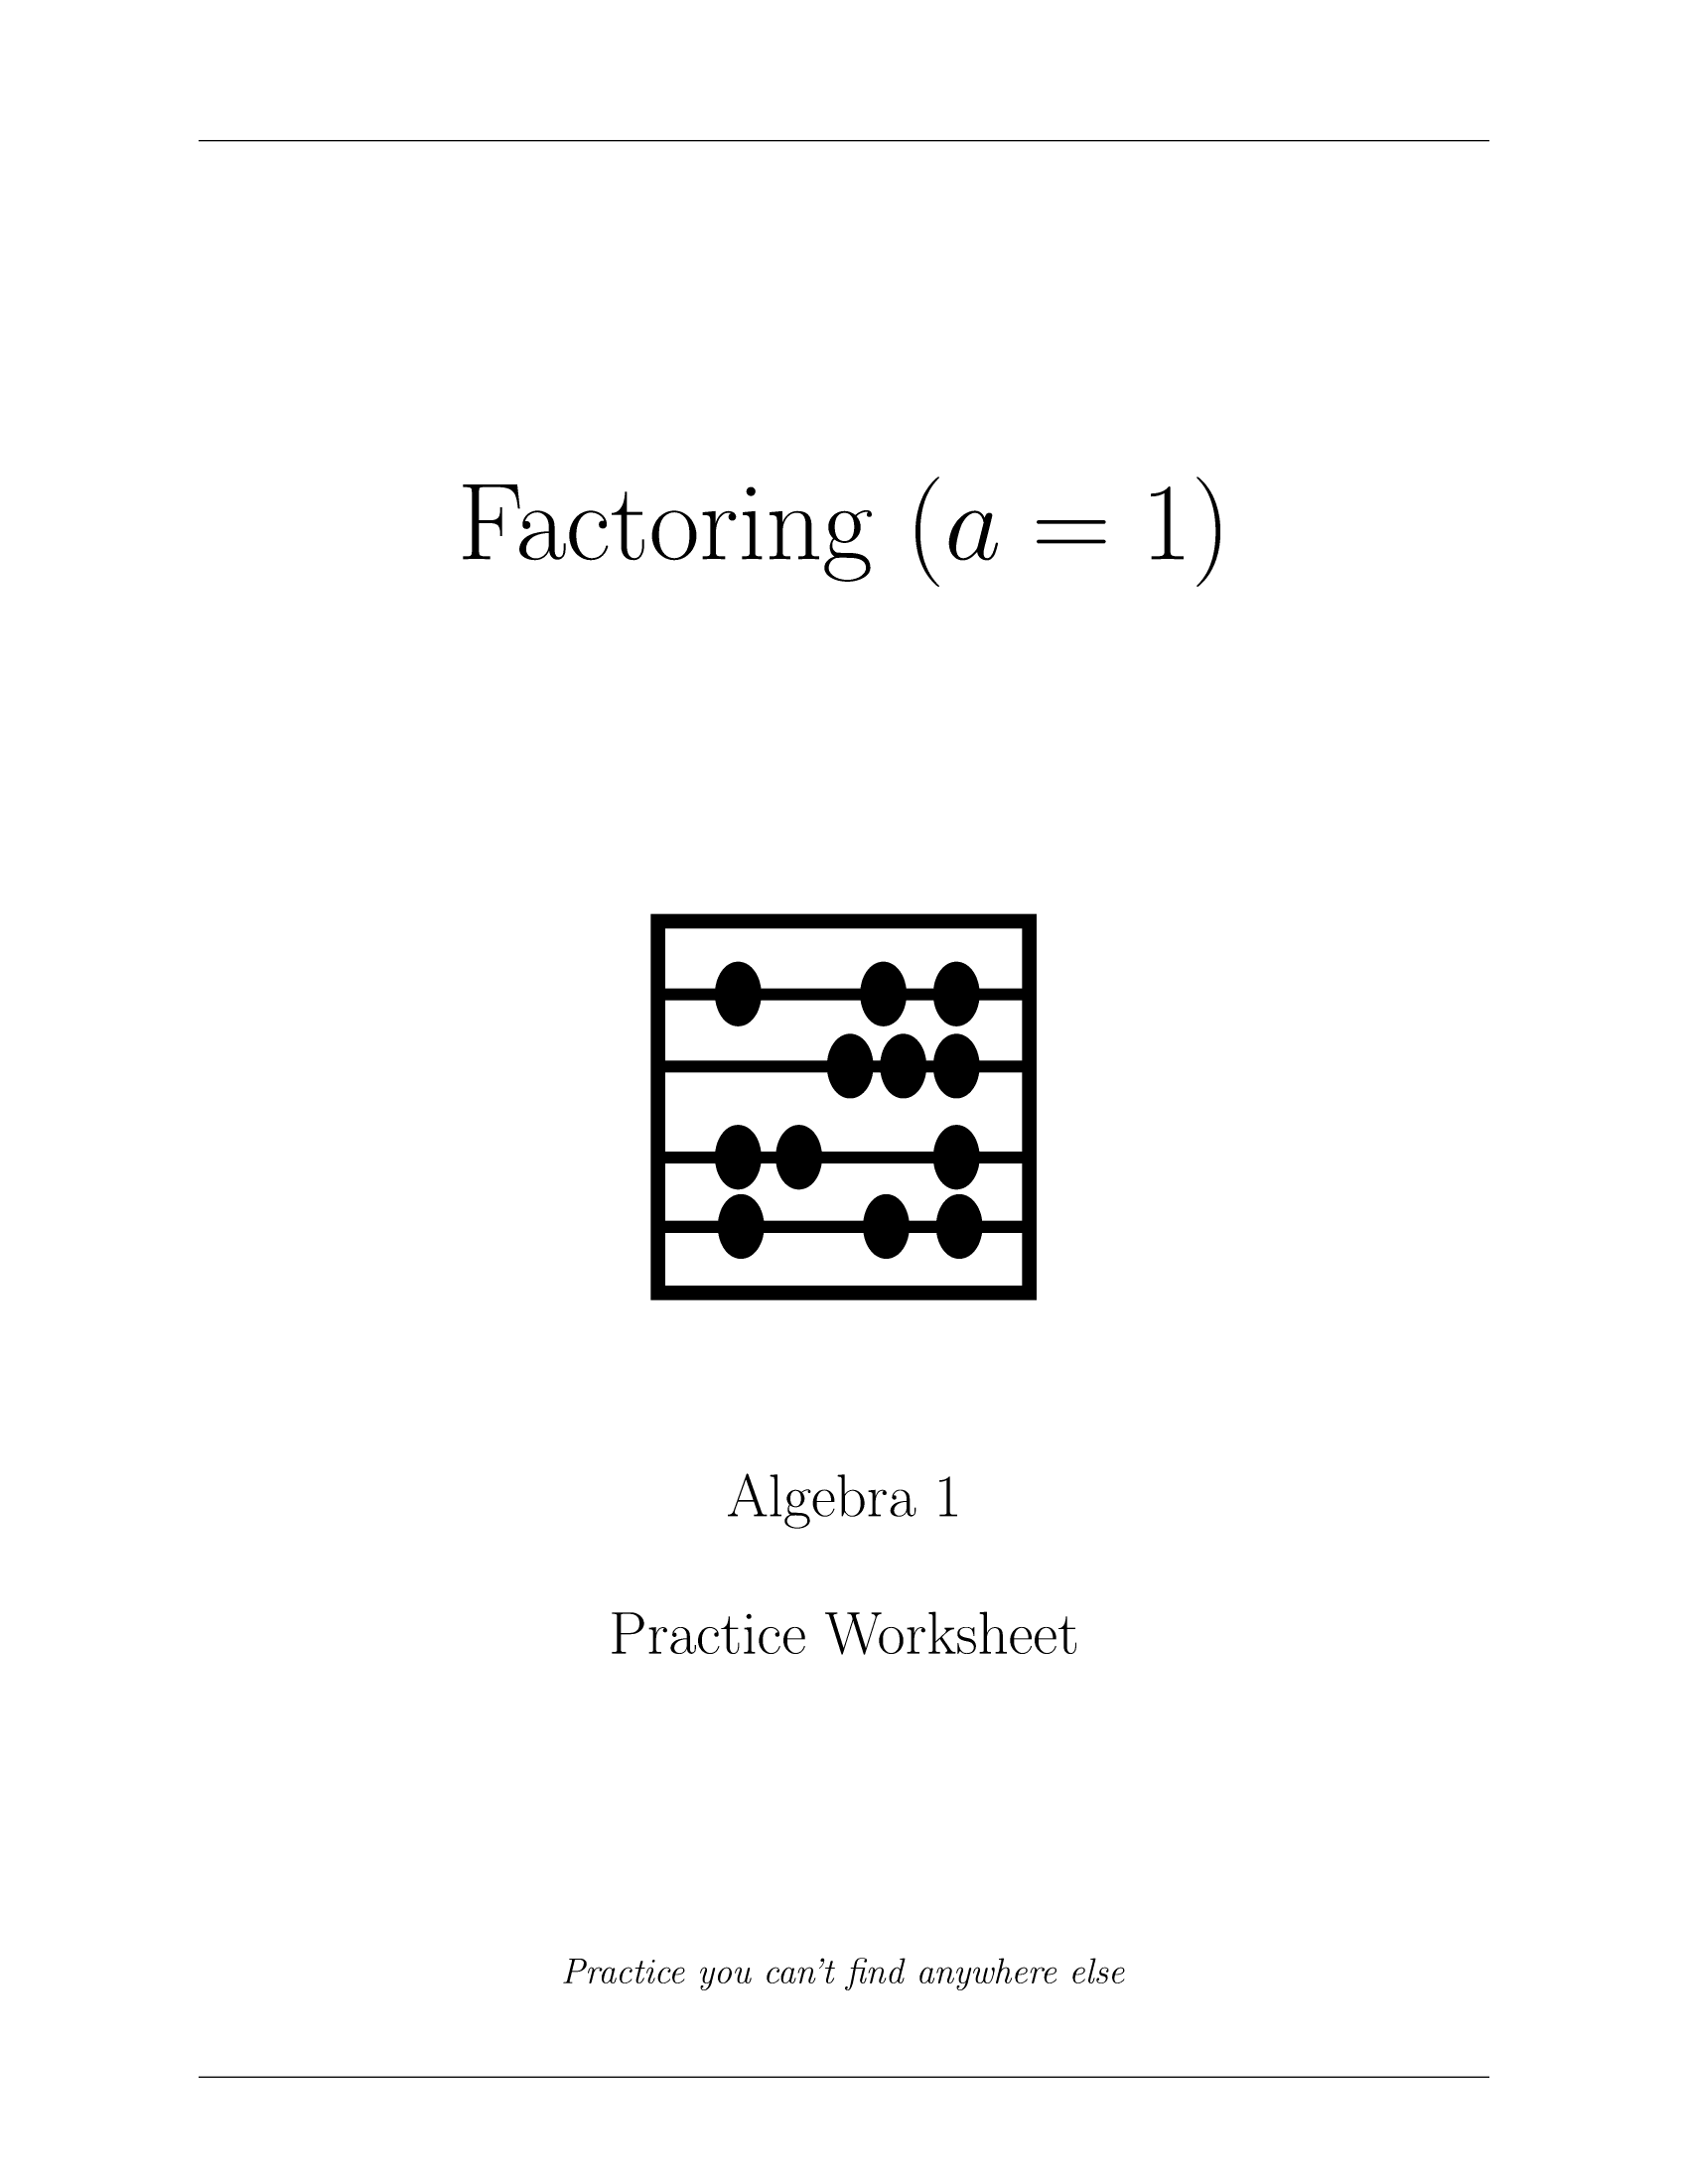 factoring-a-1-worksheet-book-tutoring-by-matthew